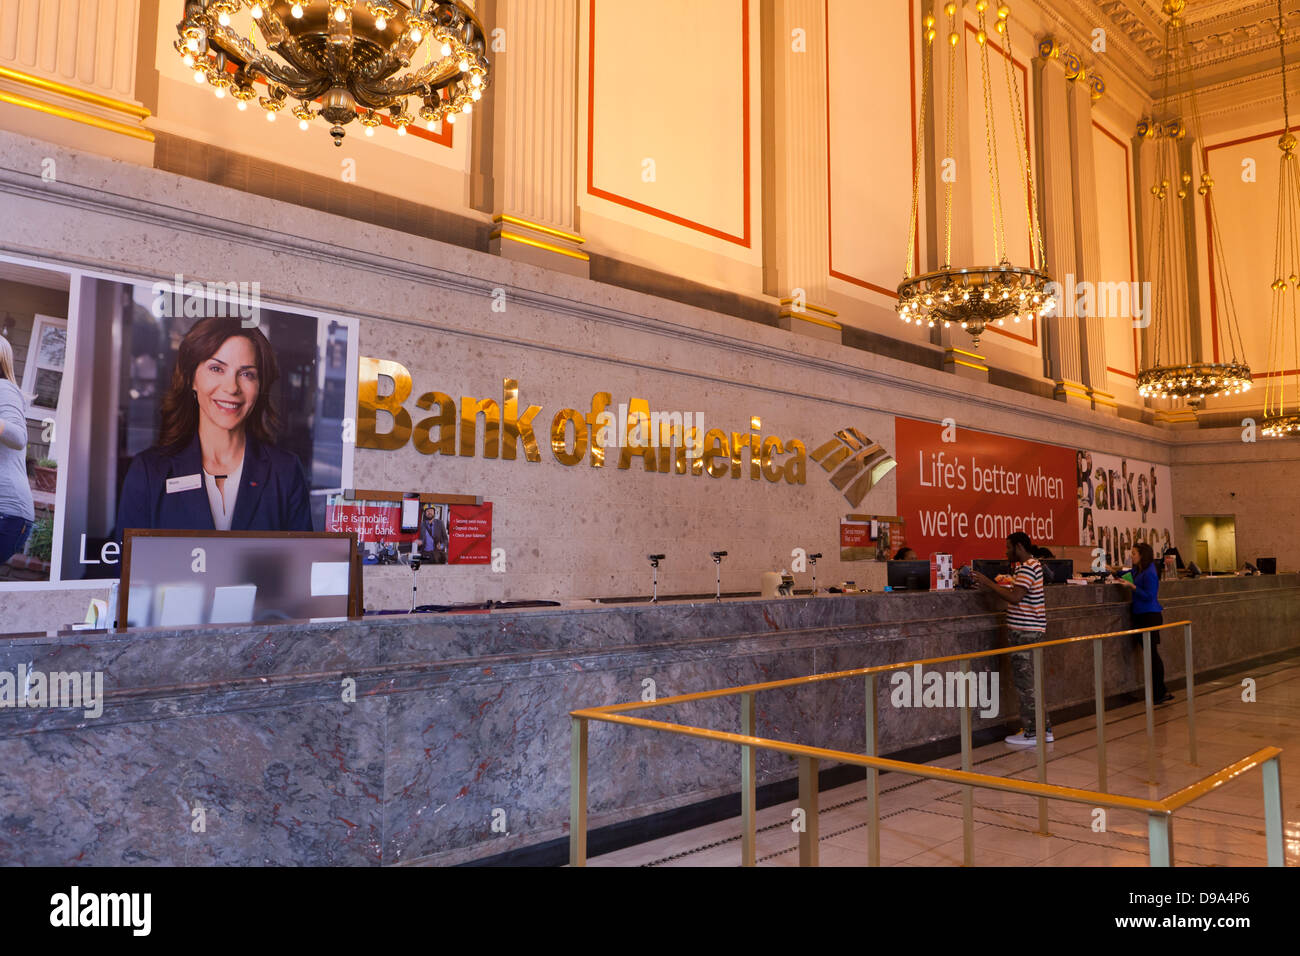 Bank of America interior, Washington DC Stock Photo